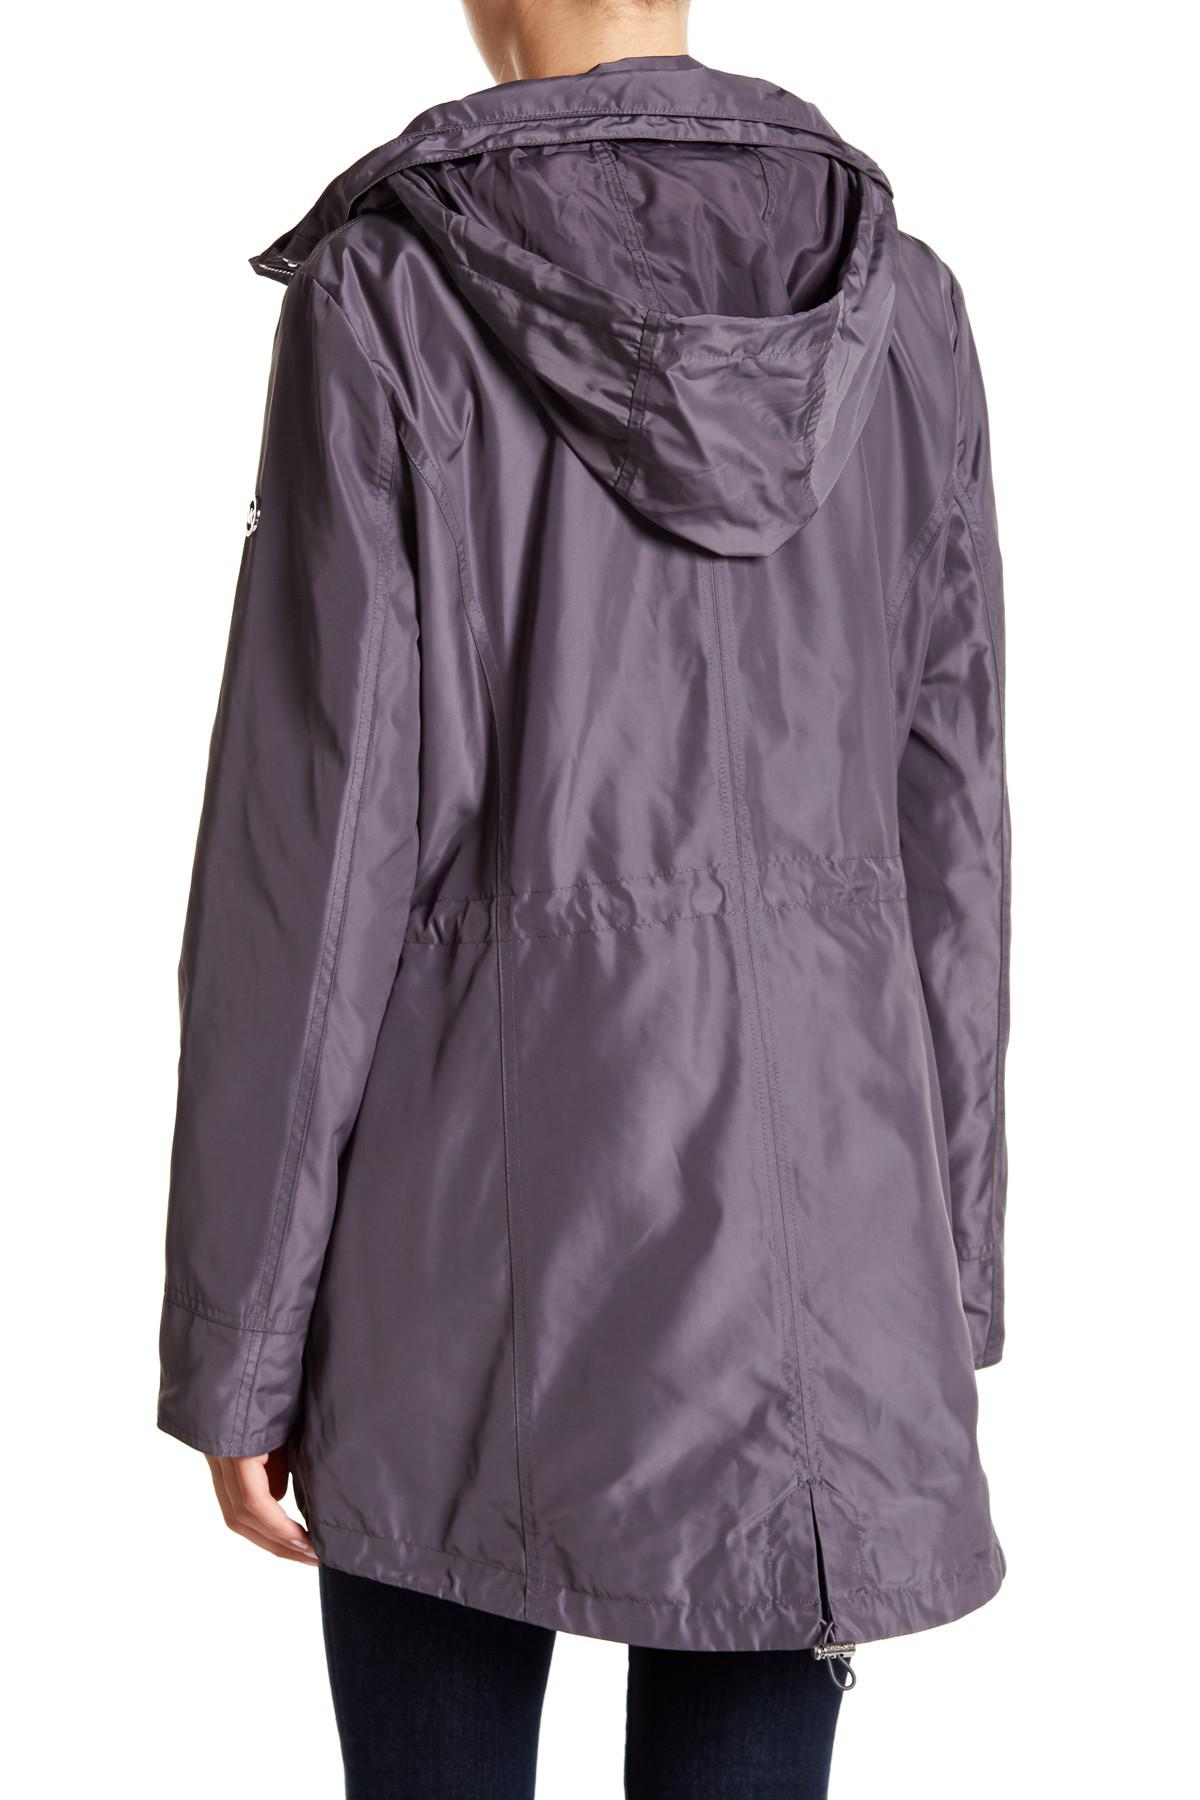 michael kors missy snap & zip front hooded raincoat